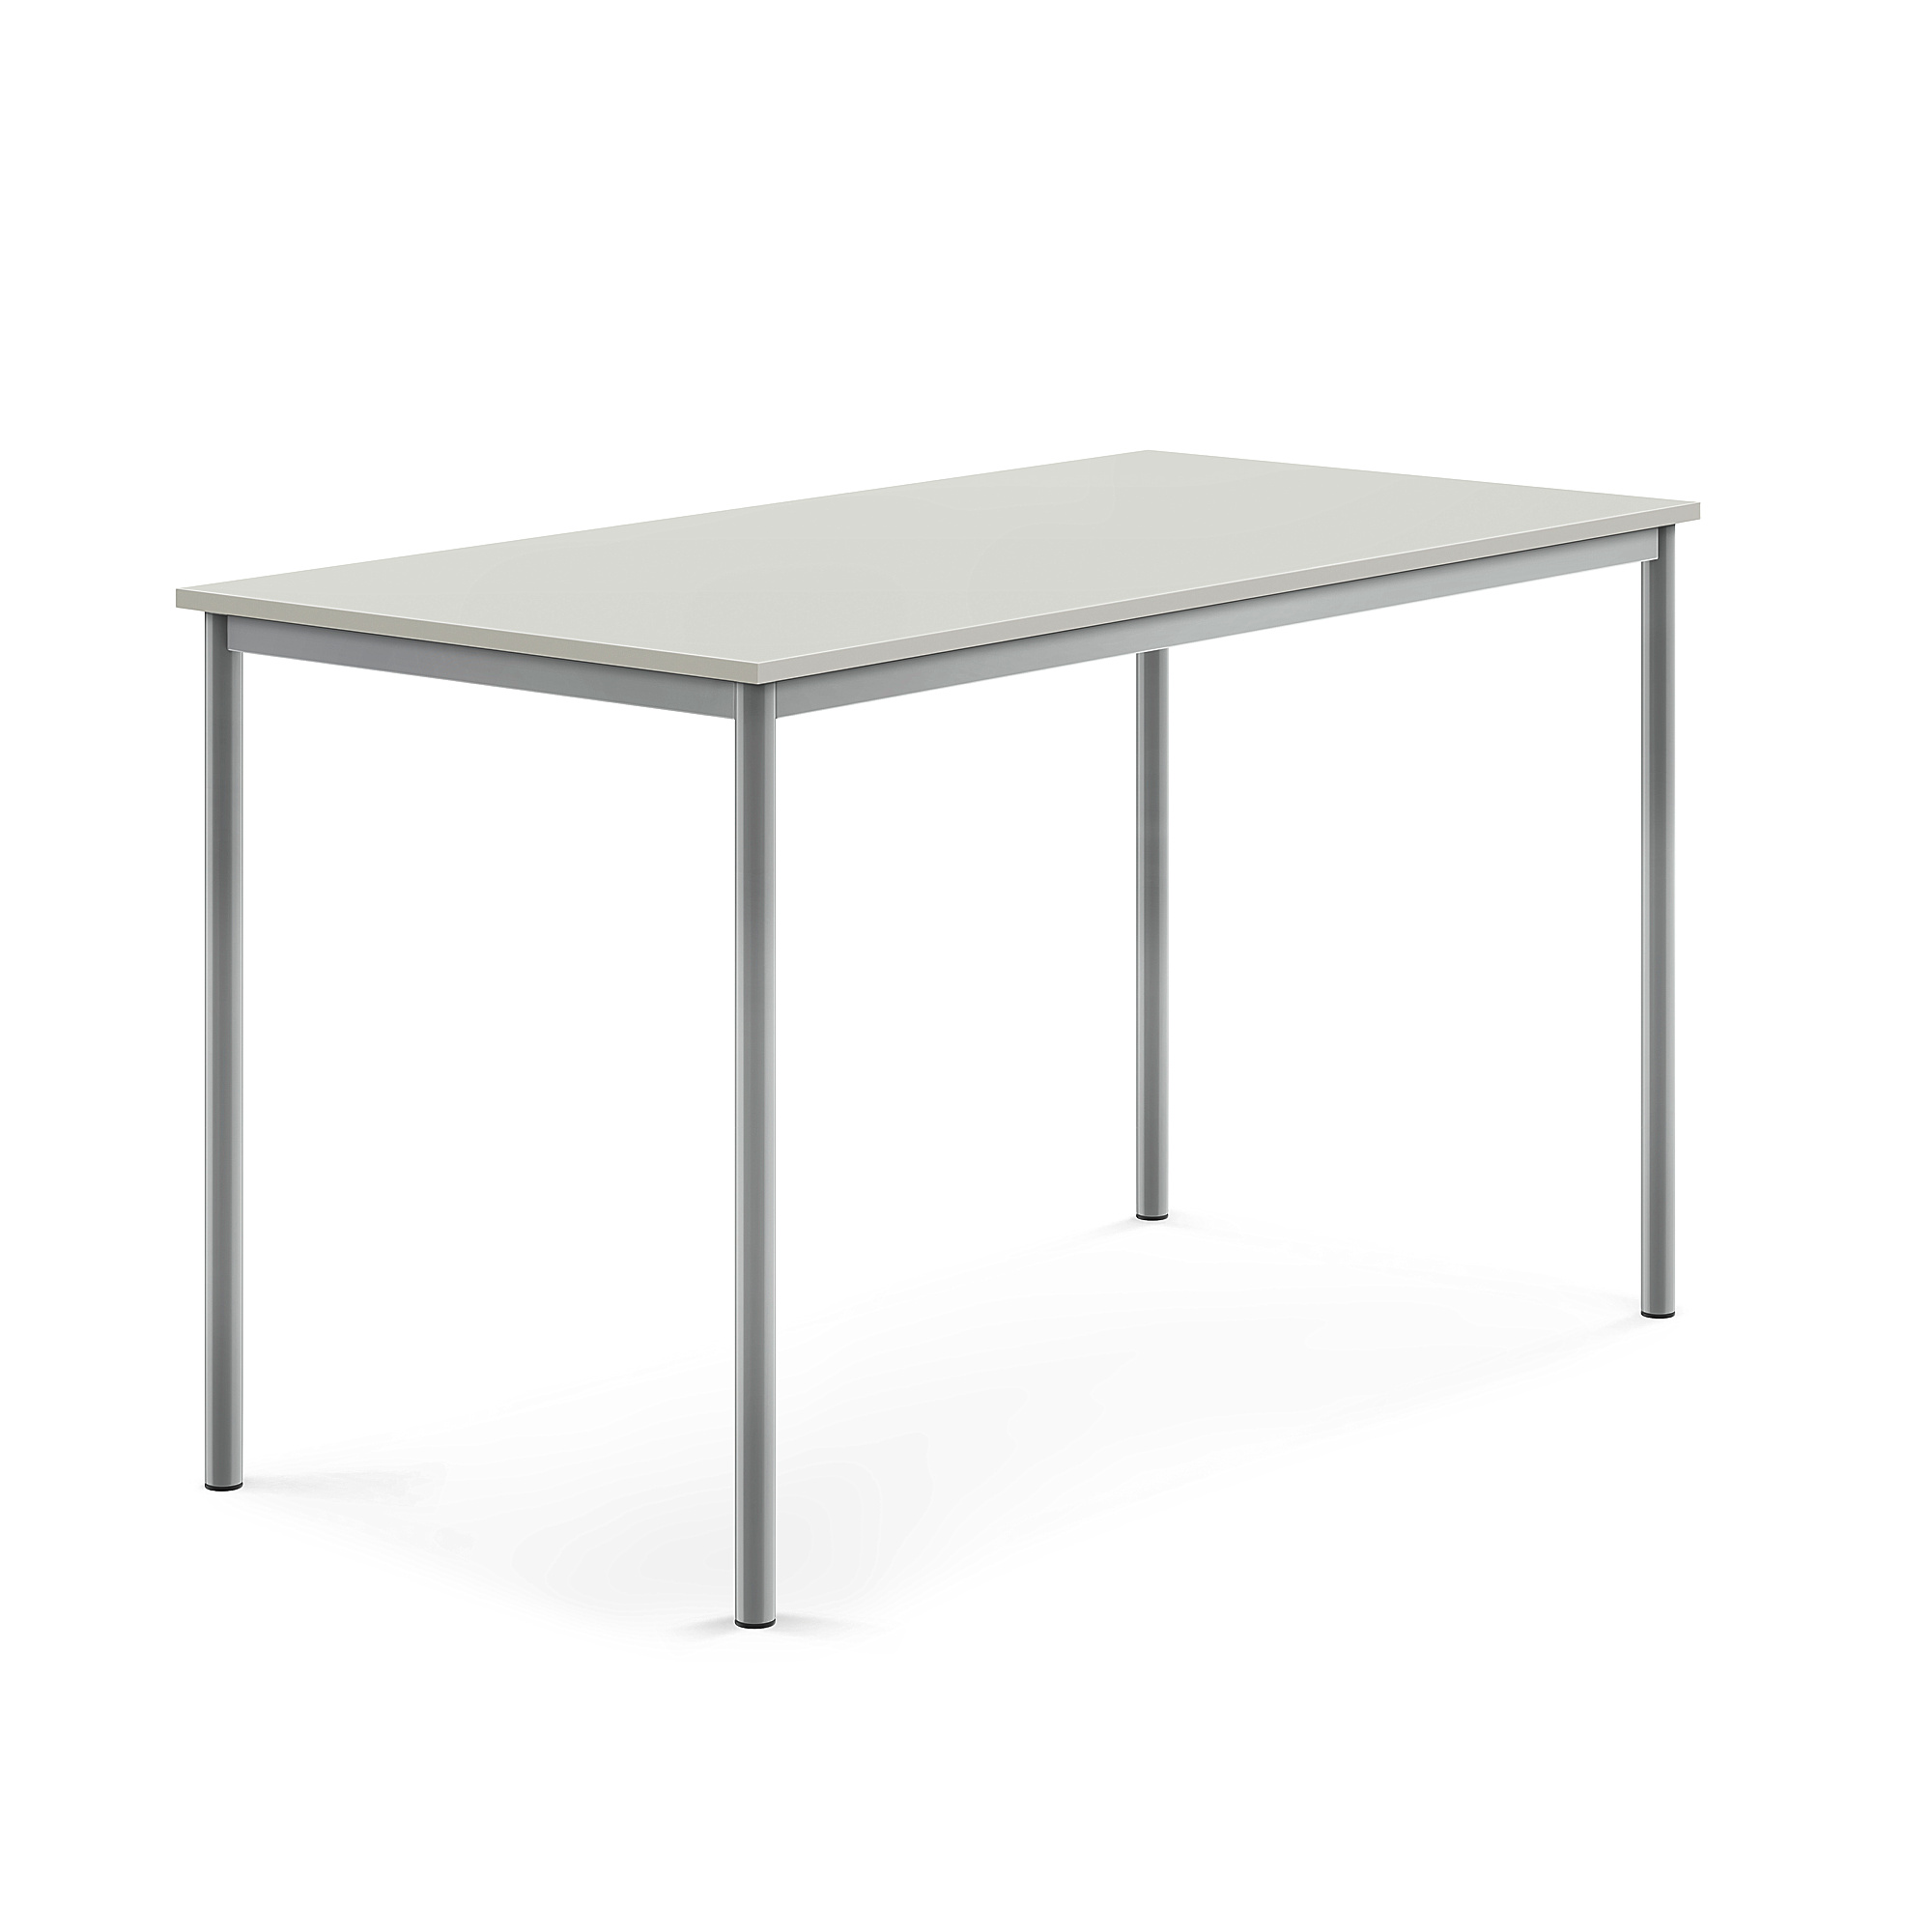 Stůl BORÅS, 1600x800x900 mm, stříbrné nohy, HPL deska, šedá